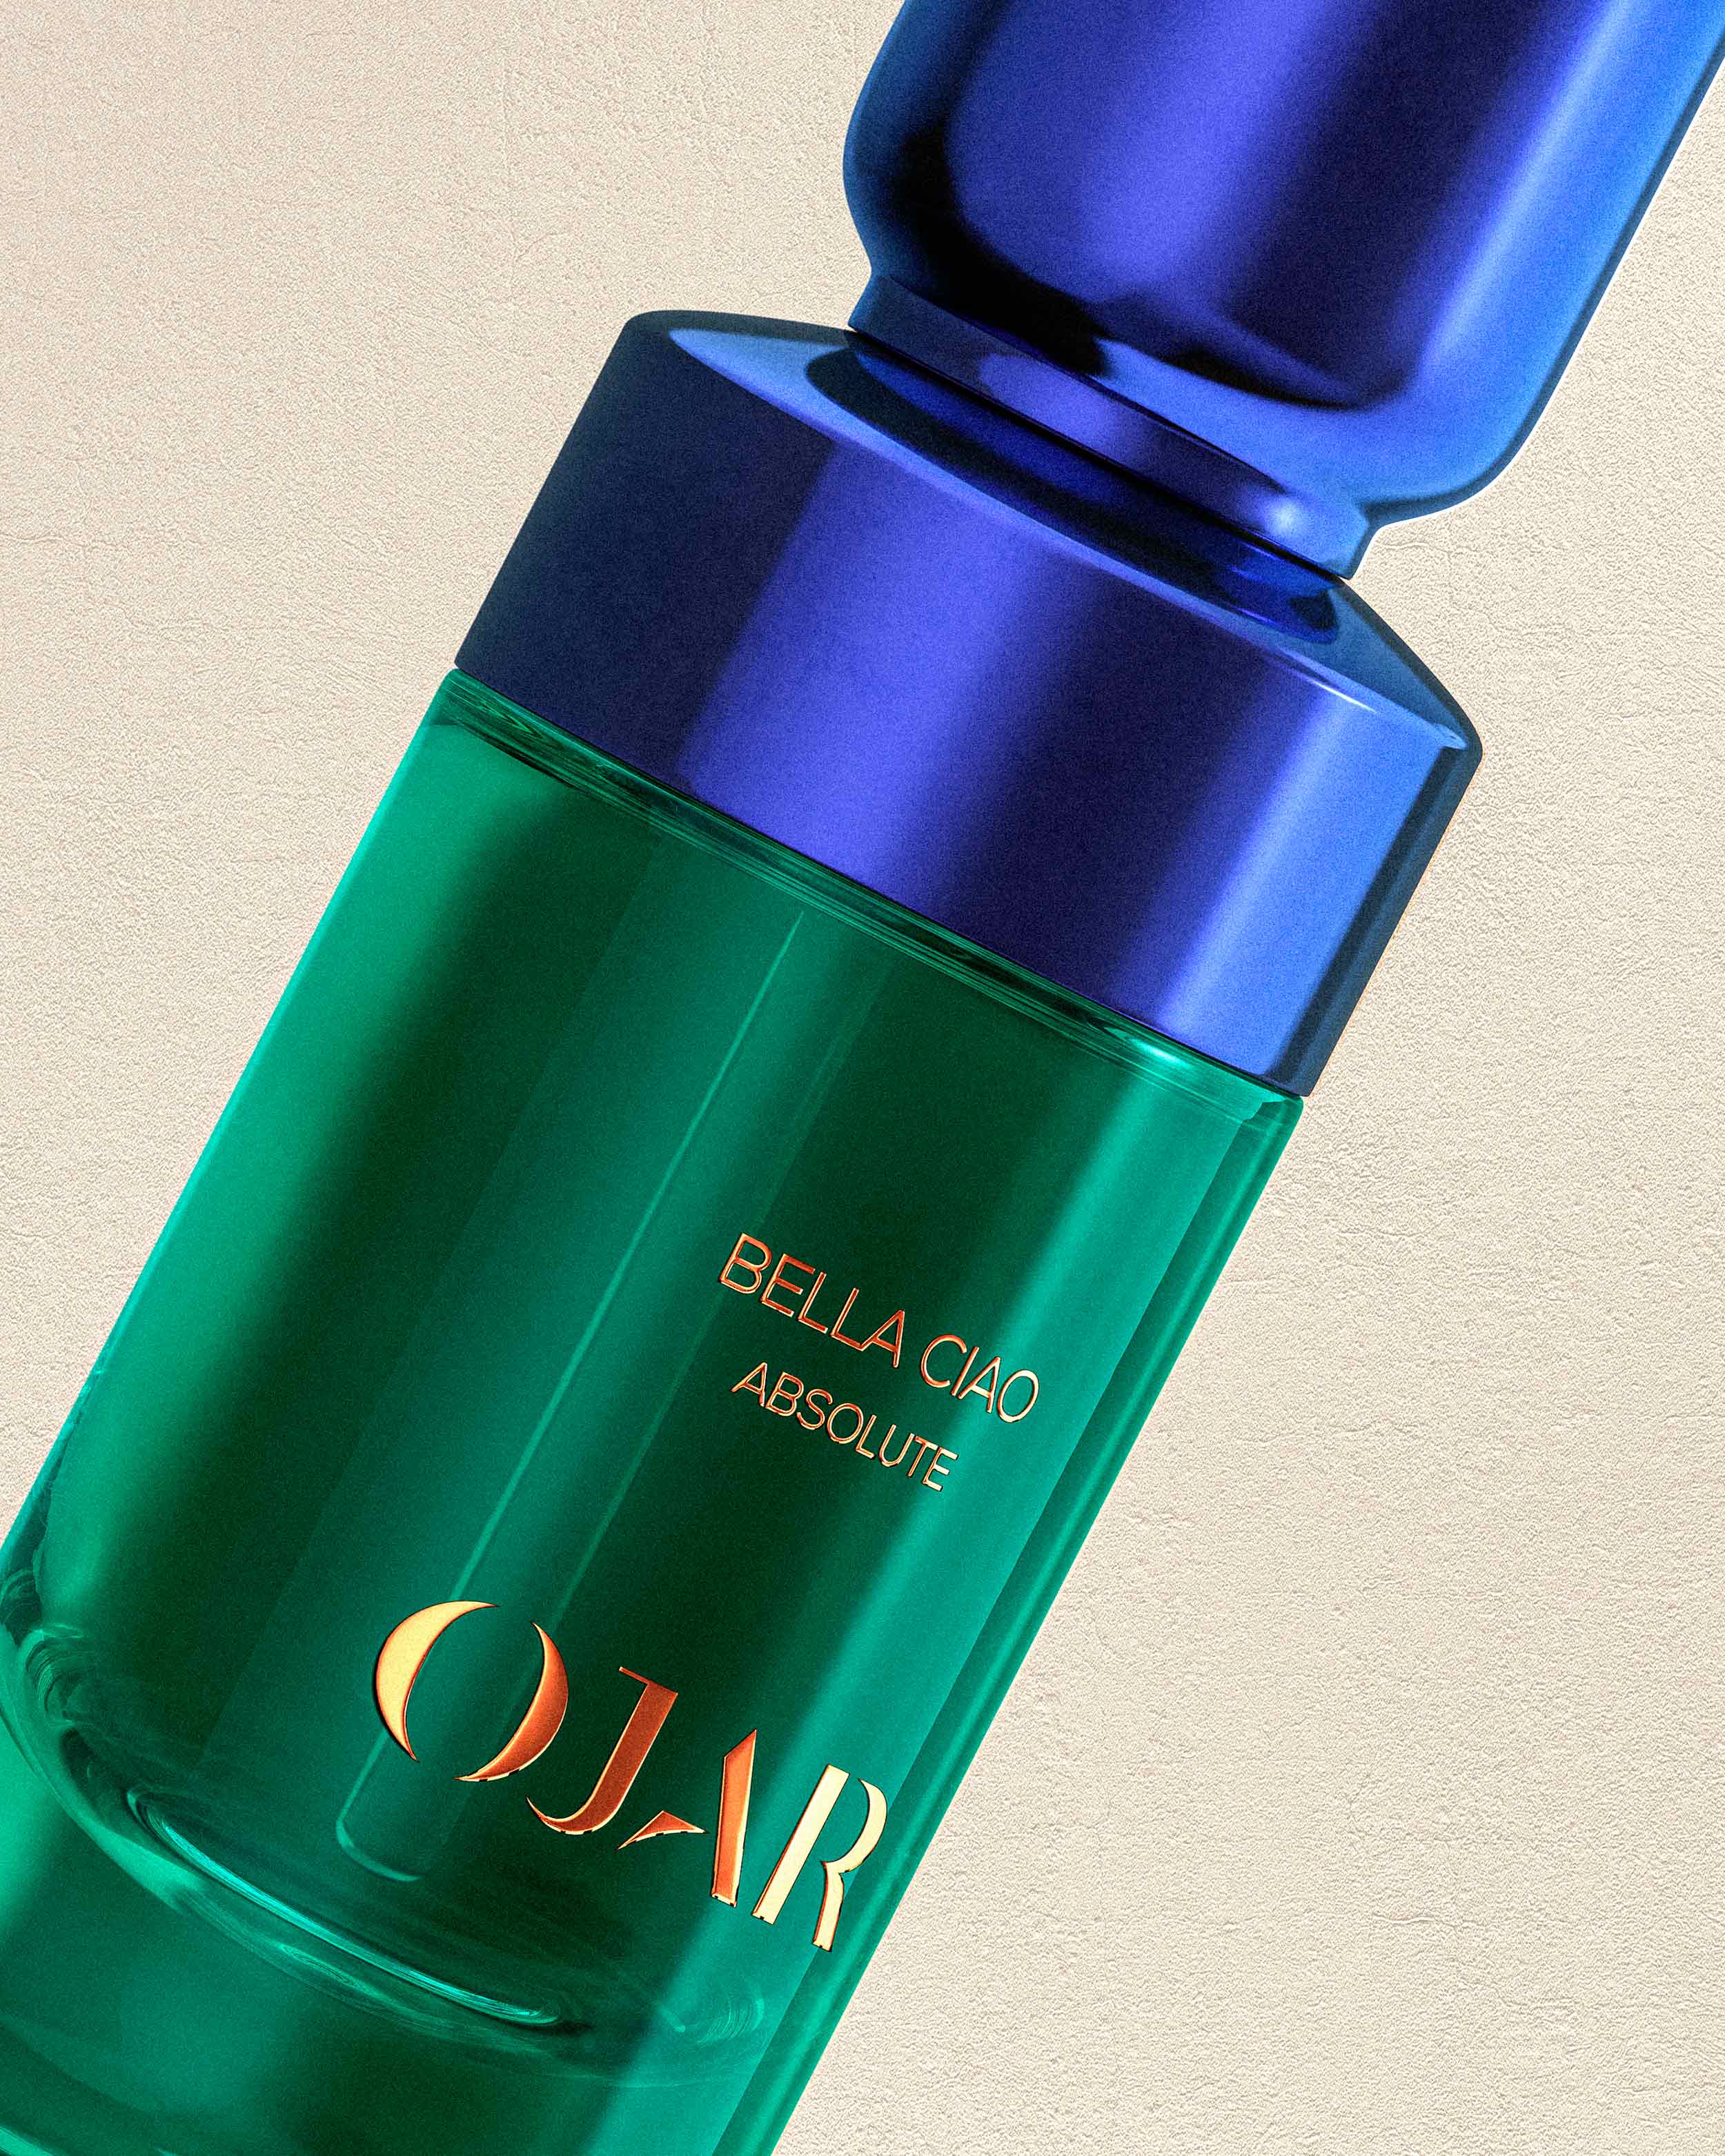 OJAR Absolute Bella Ciao Perfume Close Up